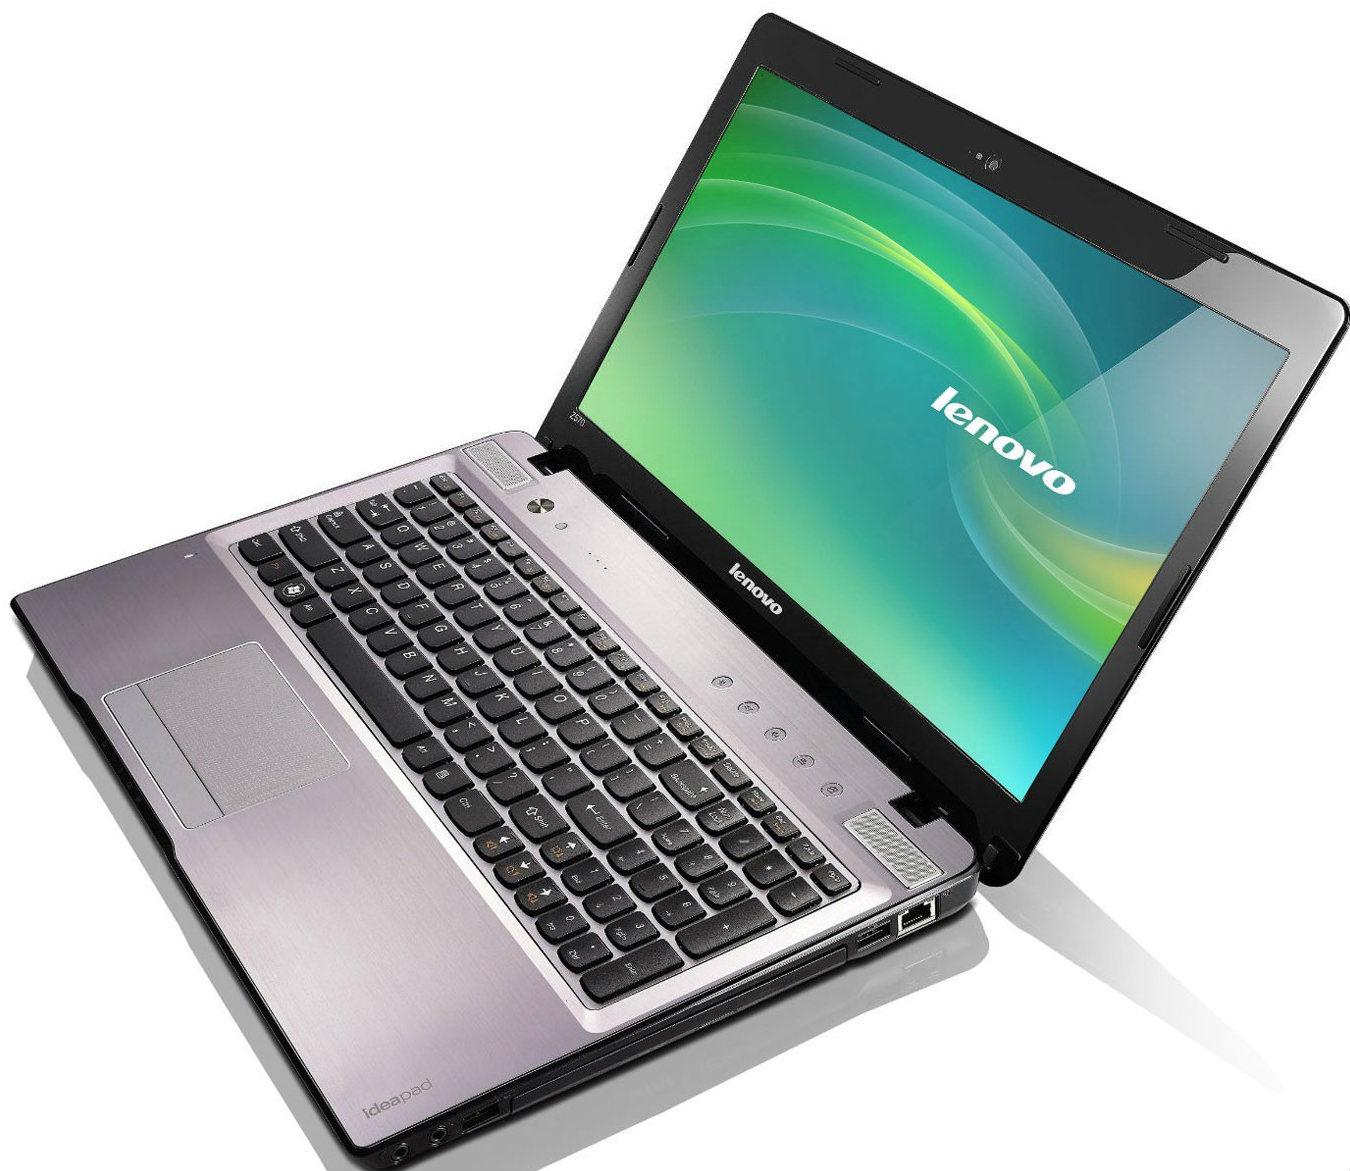 Lenovo Ideapad Z570 (59-304308) Laptop (Core i5 2nd Gen/3 GB/750 GB/Windows 7) Price